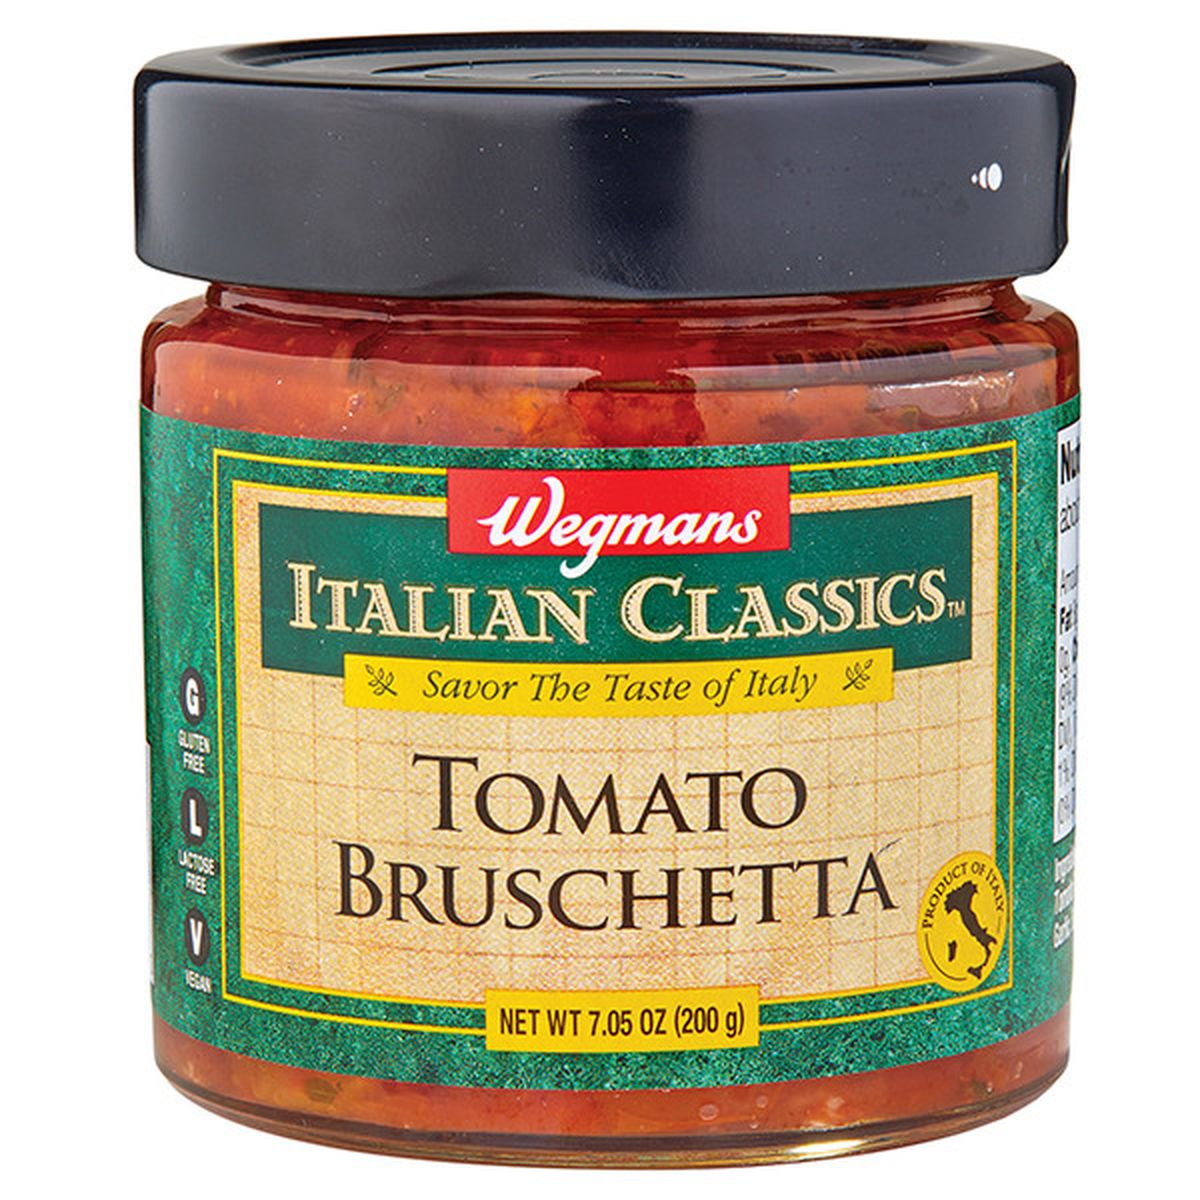 Calories in Wegmans Italian Classics Tomato Bruschetta